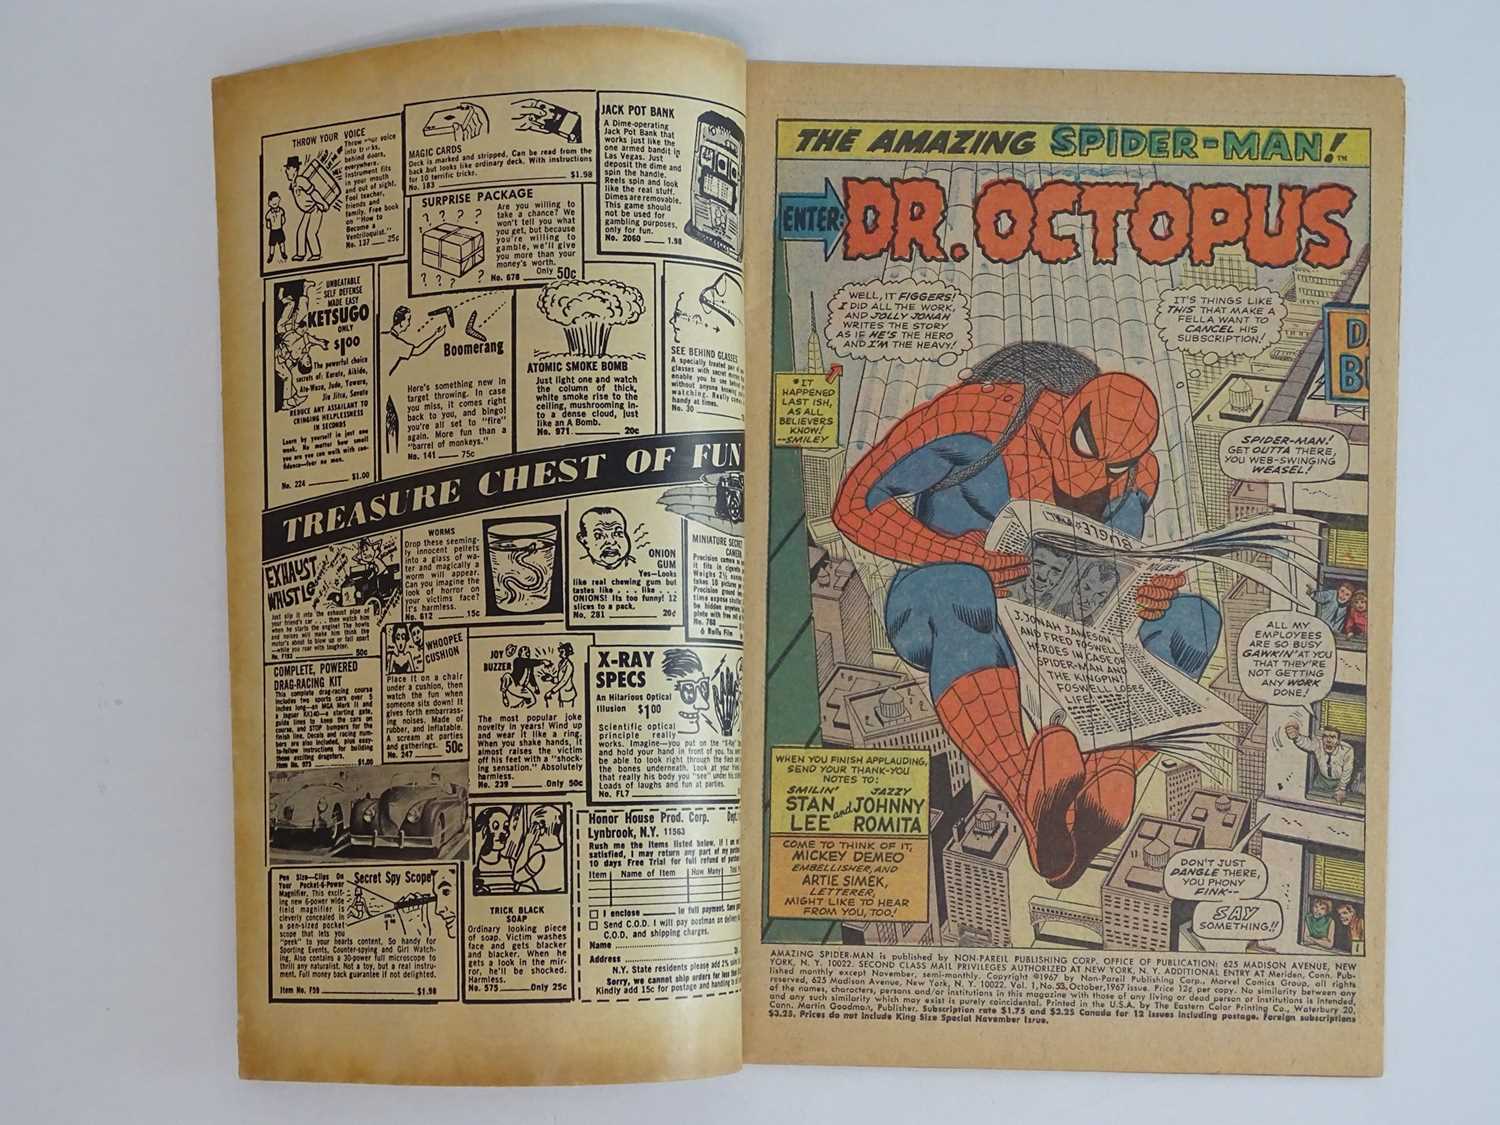 AMAZING SPIDER-MAN #53 - (1967 - MARVEL) - Spider-Man battles Doctor Octopus + Peter Parker and Gwen - Image 3 of 9